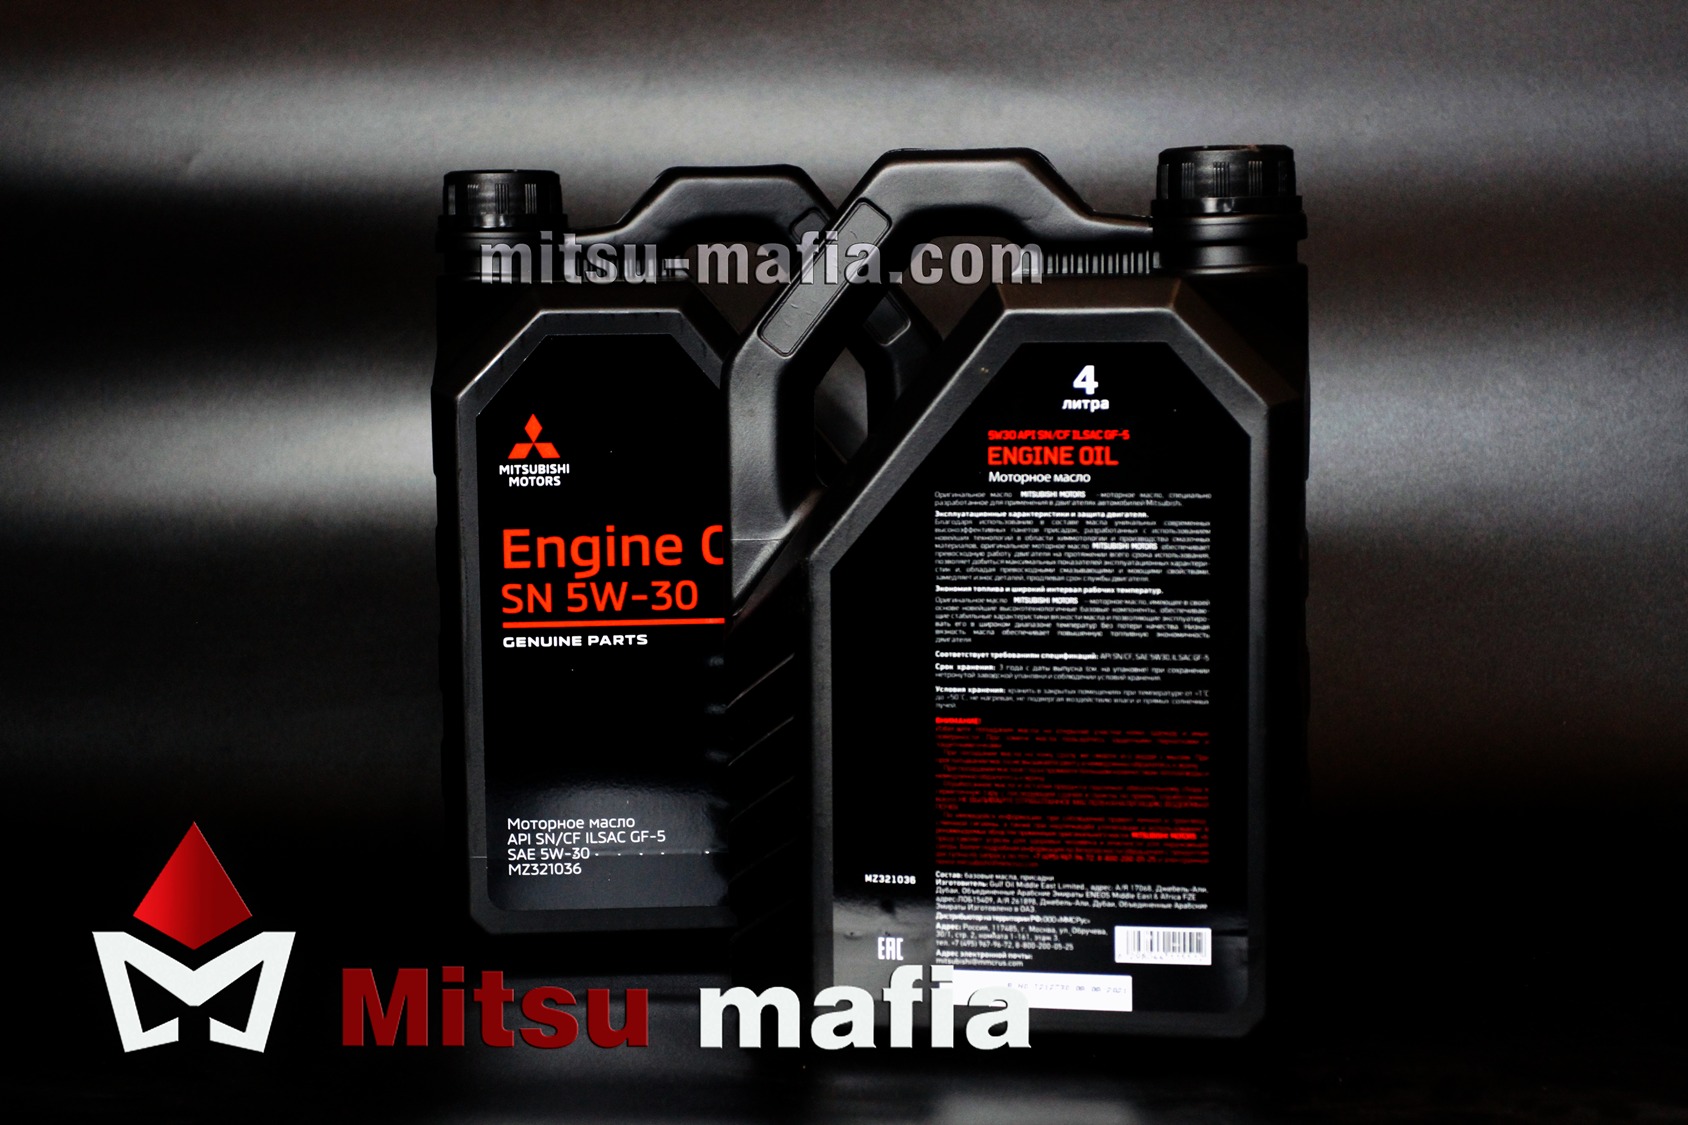  в двигатель 5w30 для Паджеро 4 4 литра - Mitsu Mafia